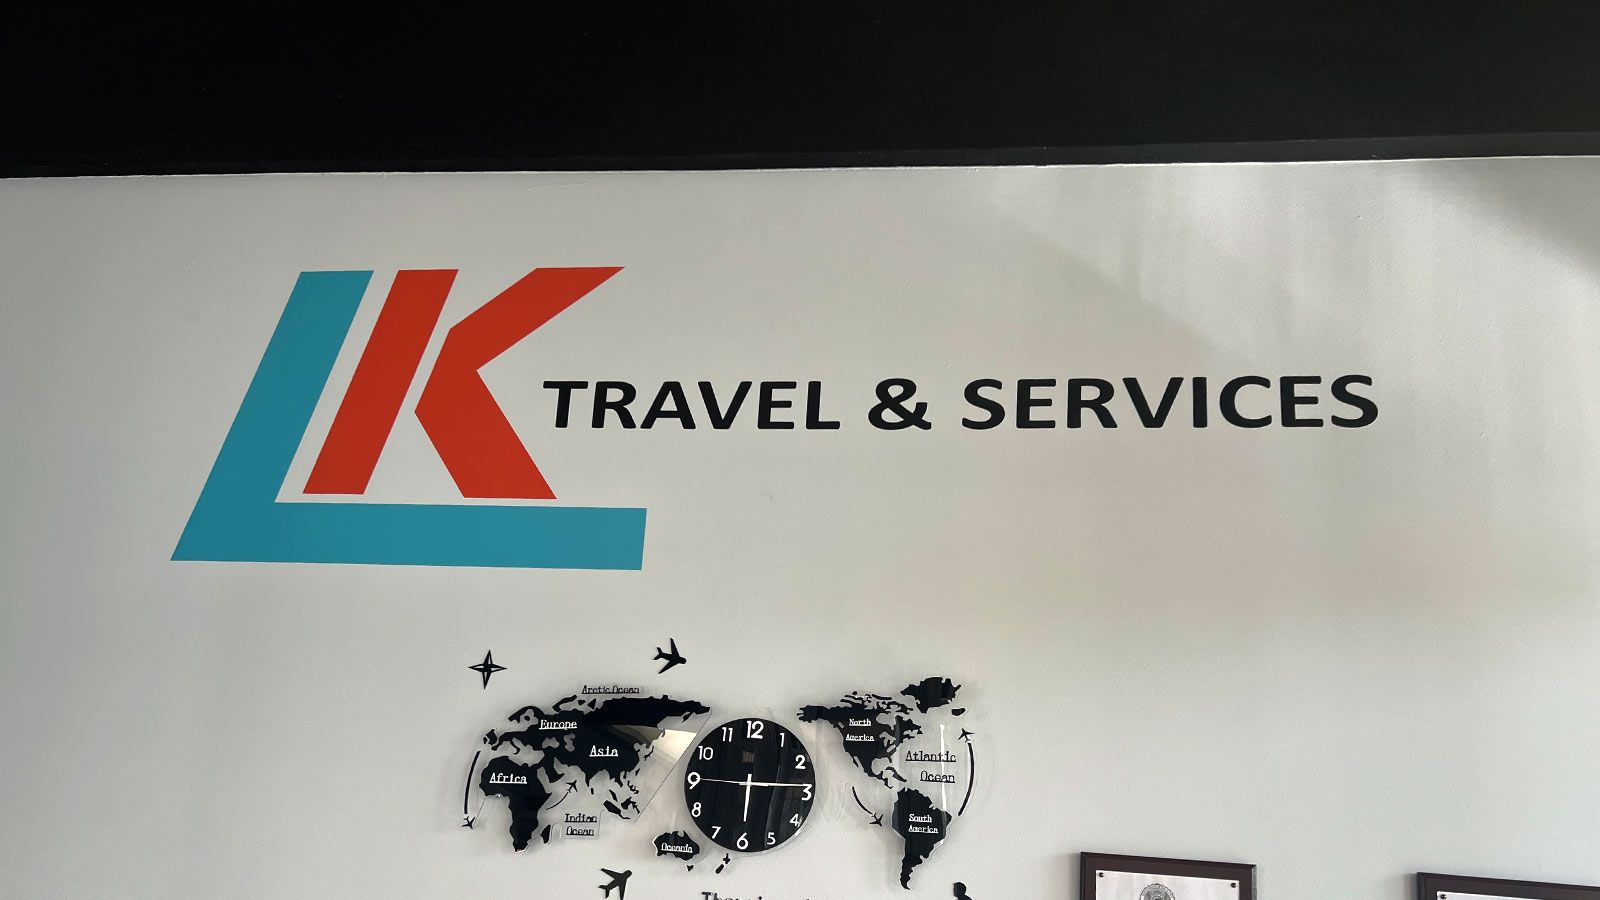 LK Travel & Services vinyl lettering